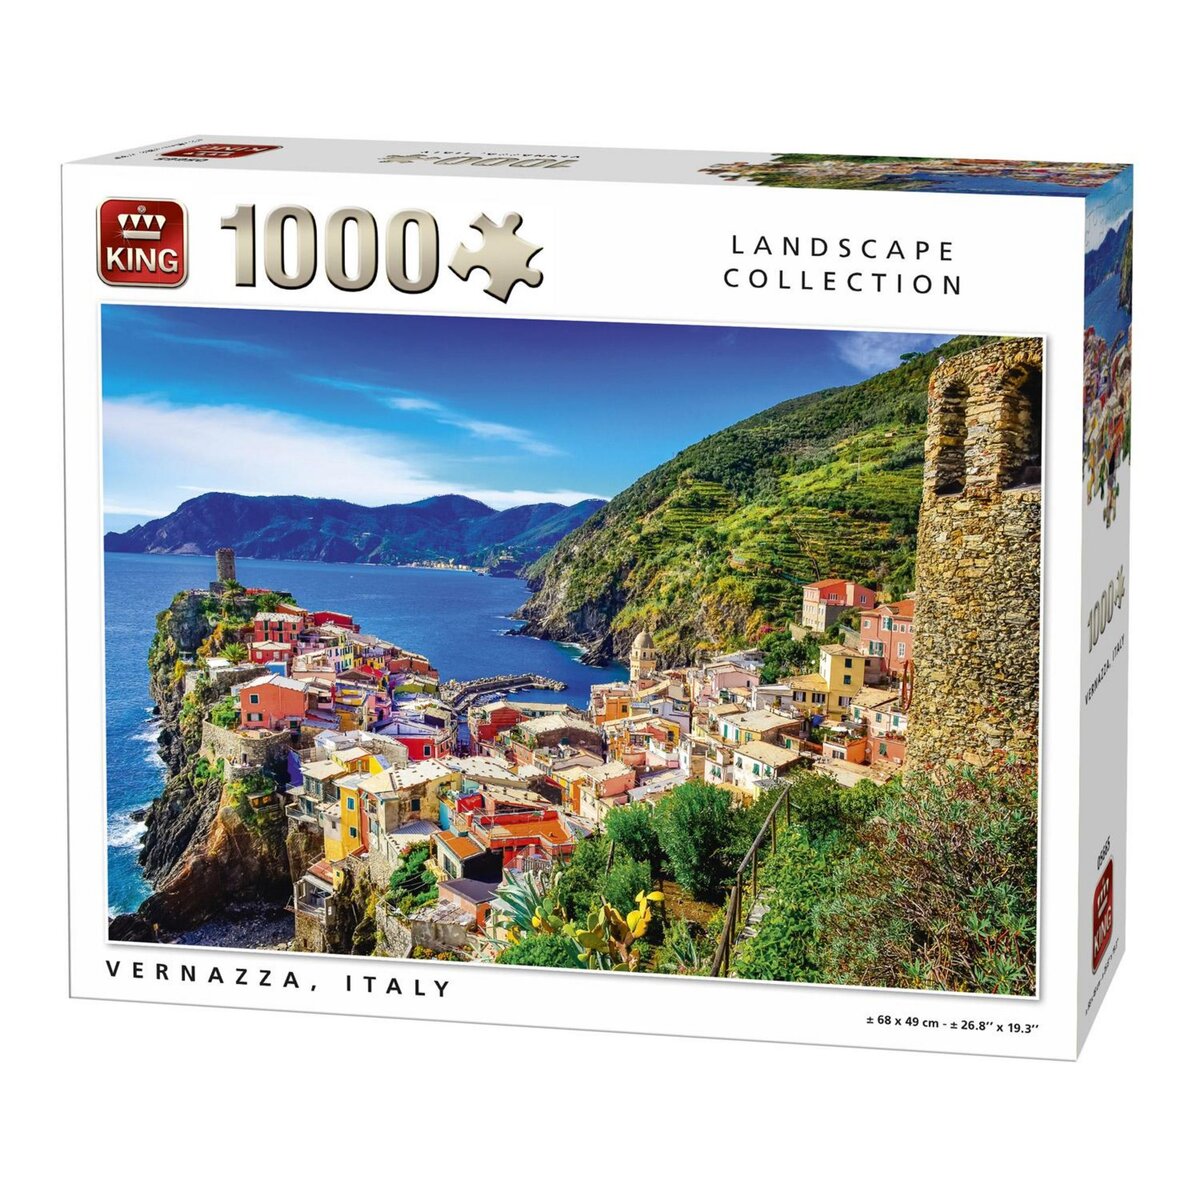 Puzzle 1500 pièces : Cinque Terre, Italie